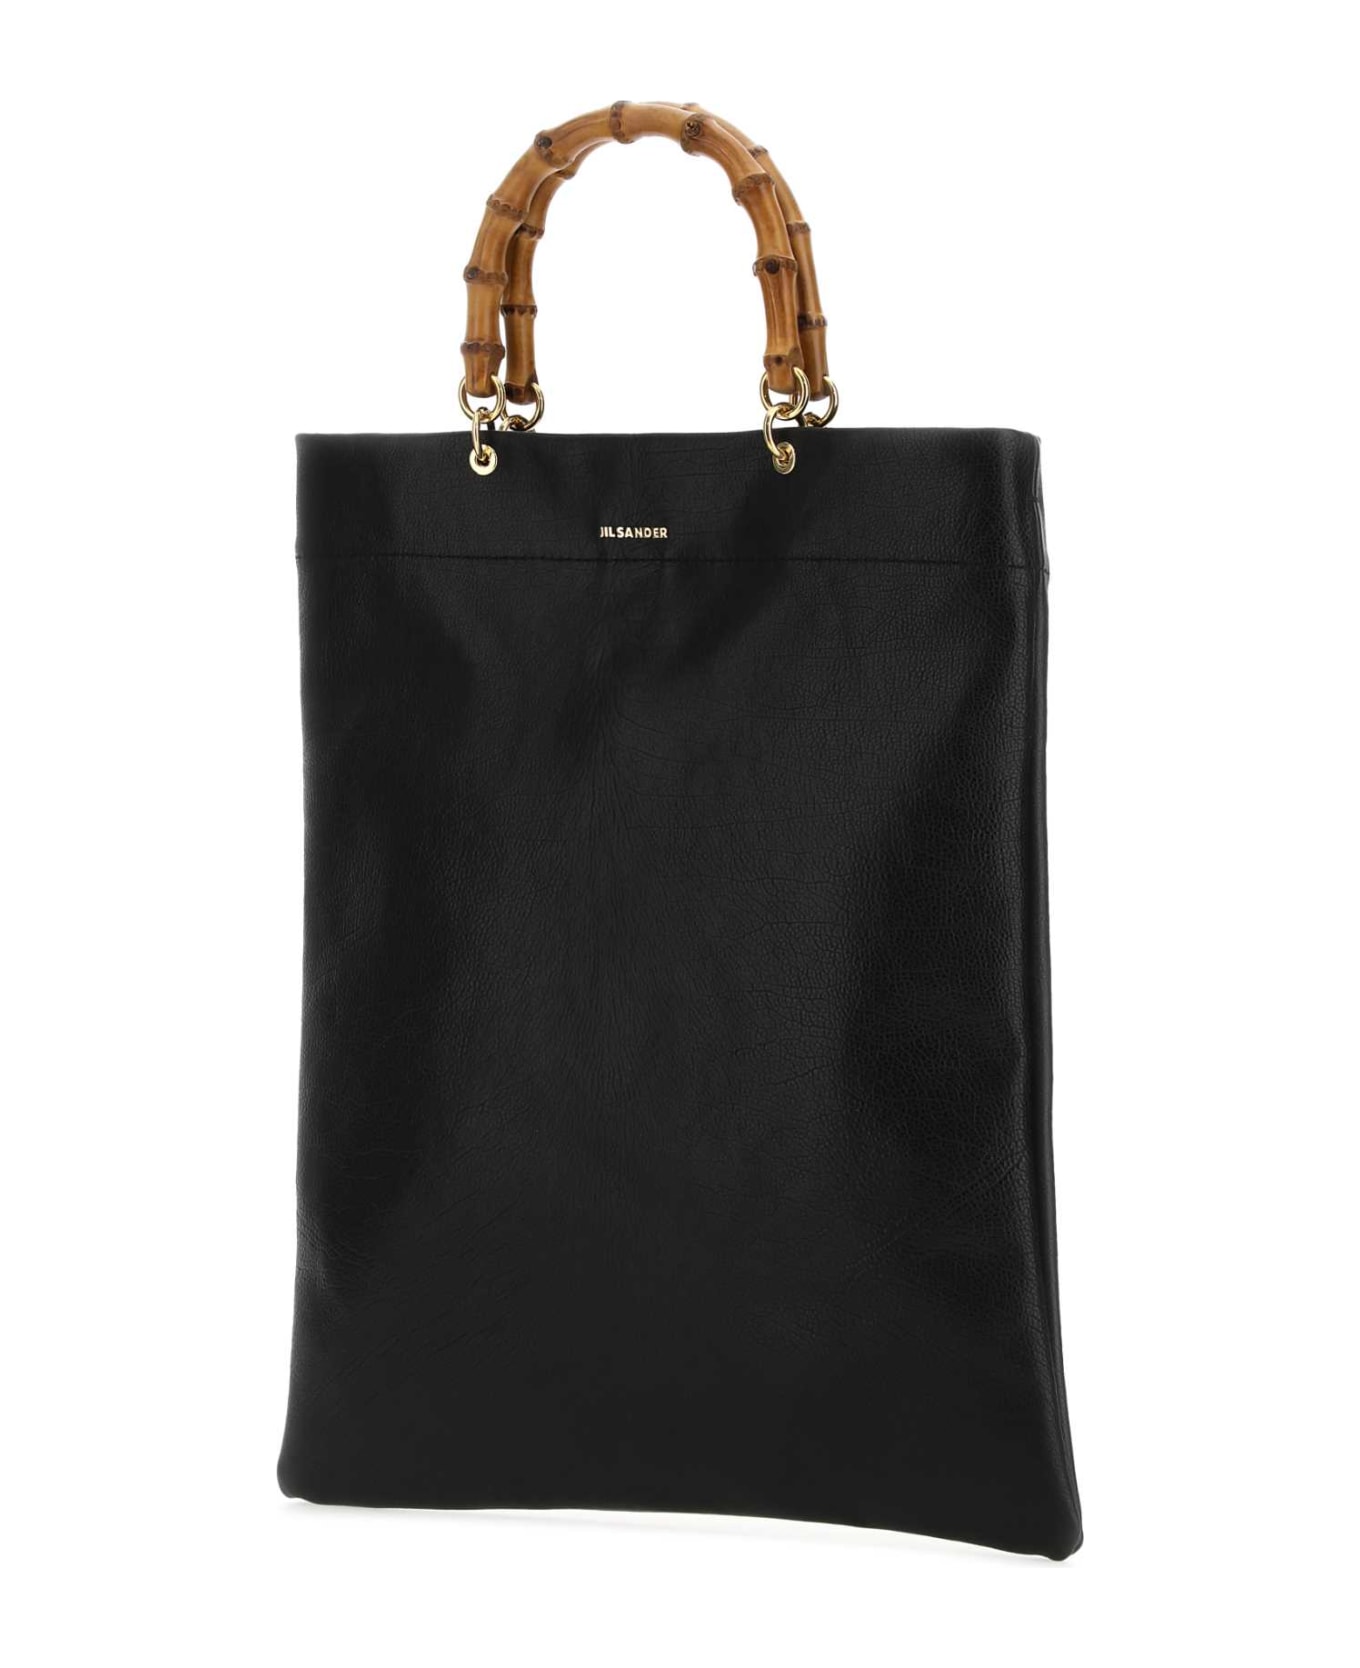 Jil Sander Black Leather Medium Shopping Bag - 001